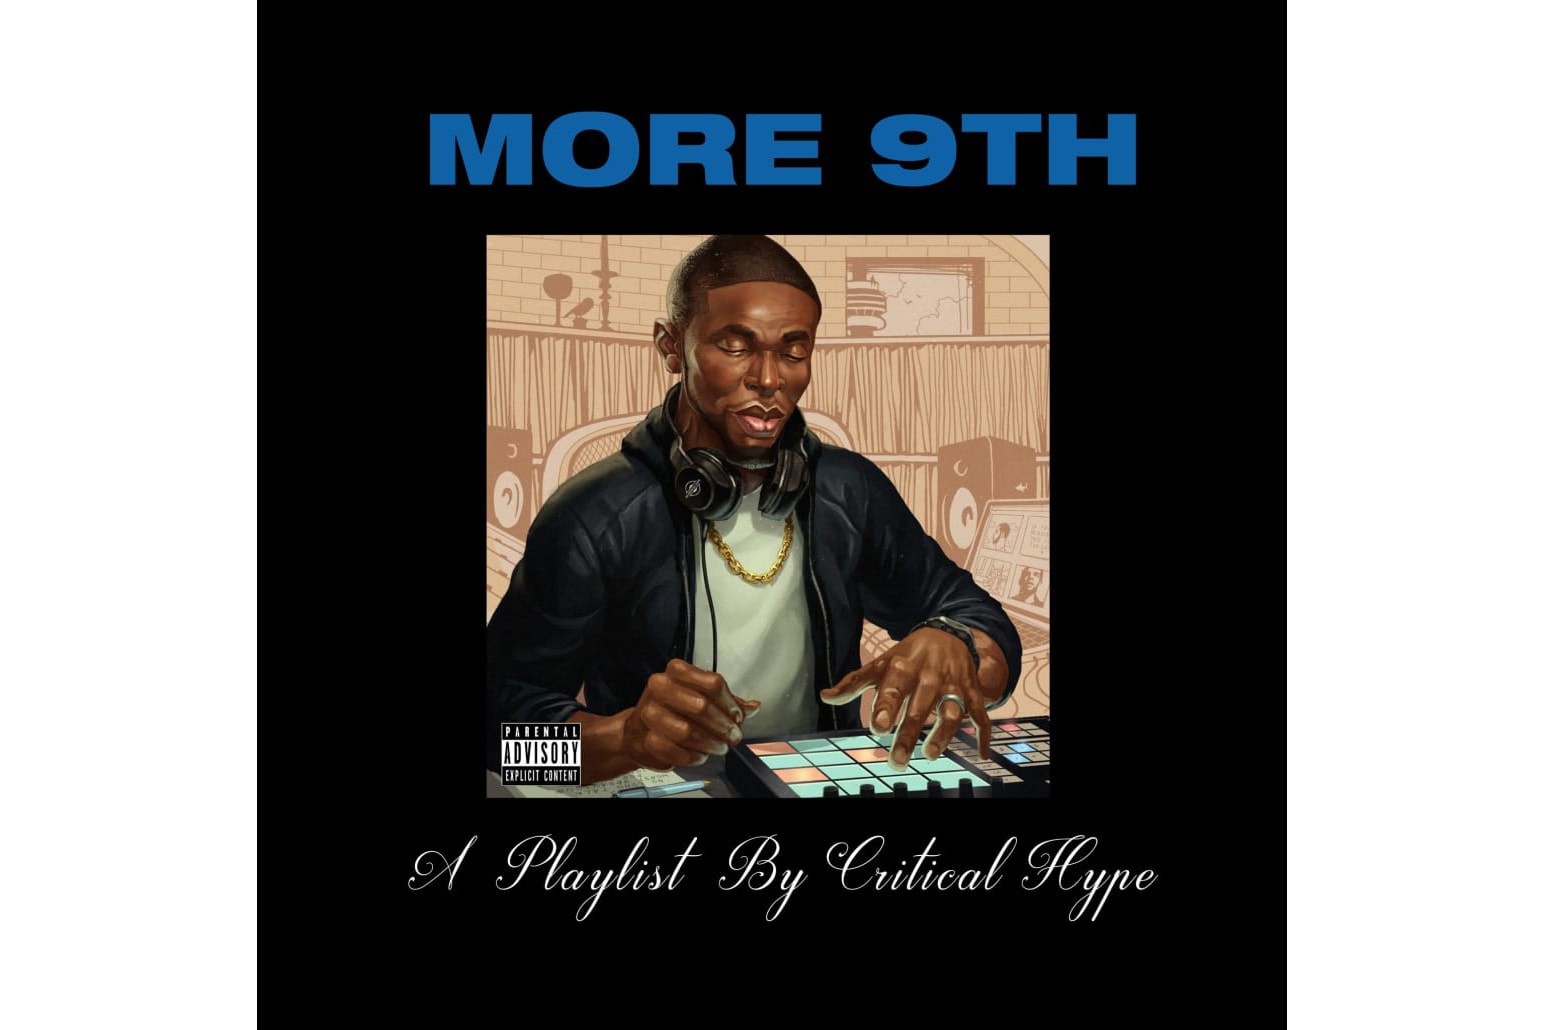 Drake 9th Wonder DJ Critical Hype More 9th mashup tape mixtape stream